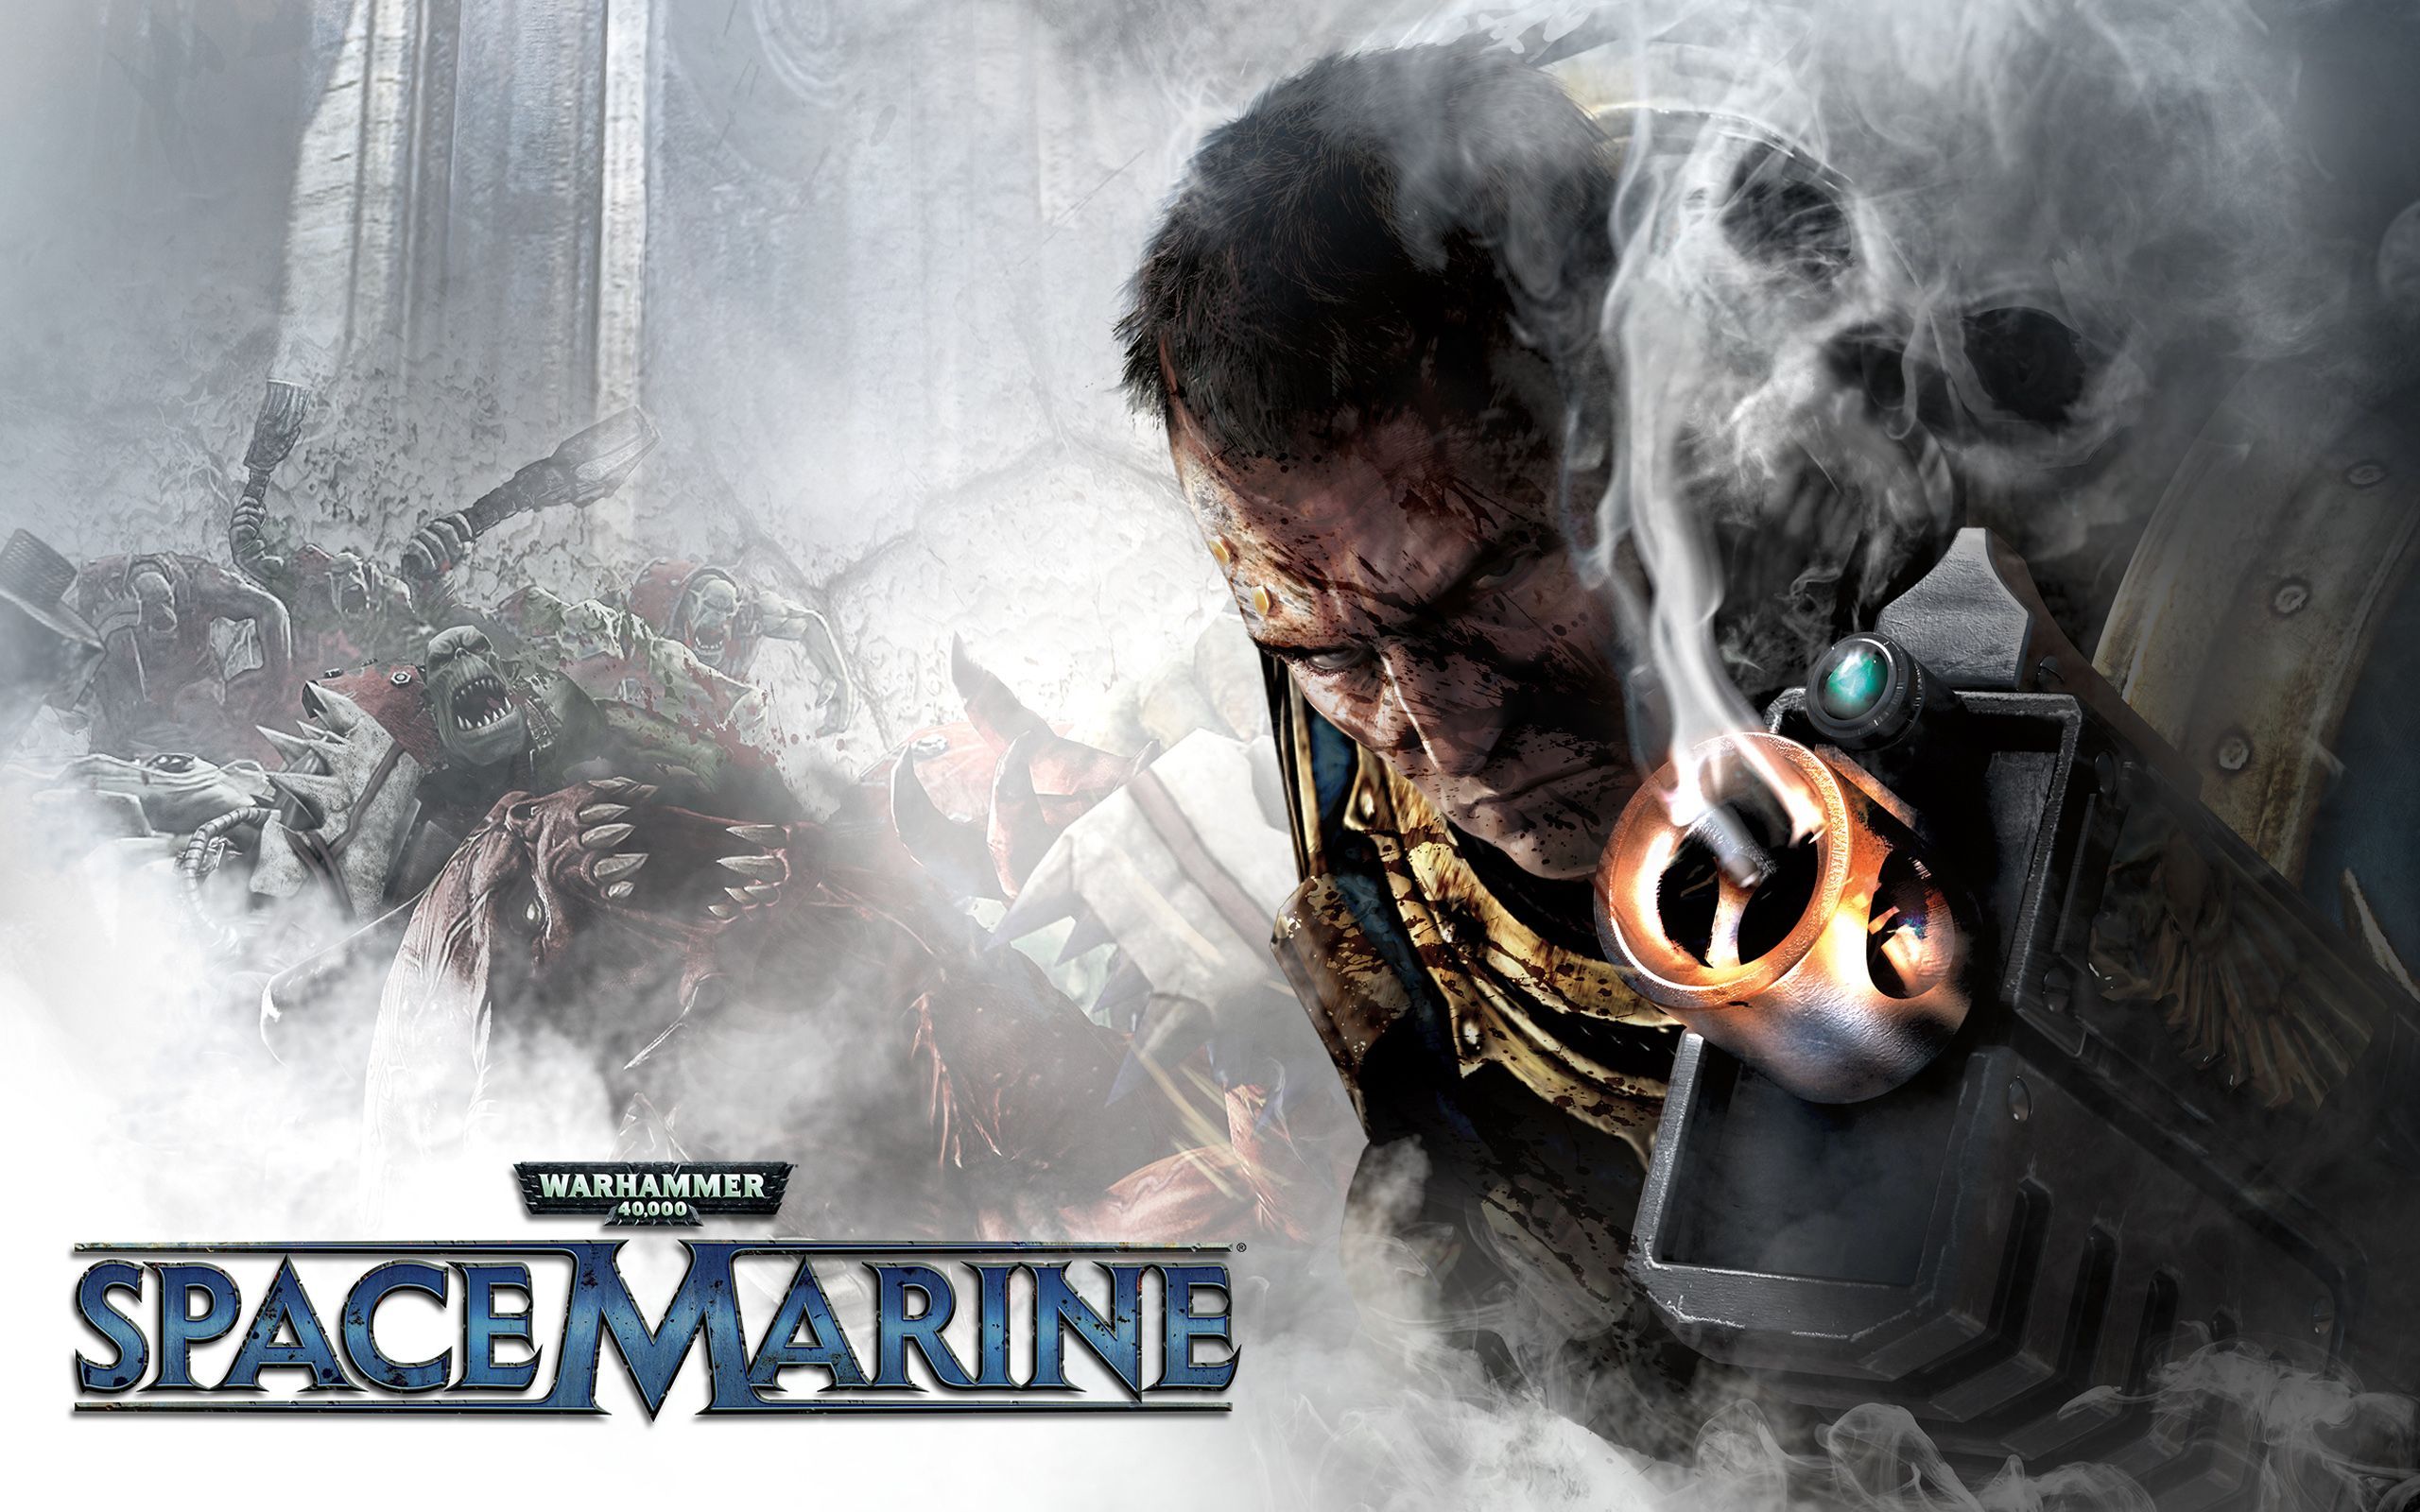 Warhammer Space Marine. Space marine, Warriors